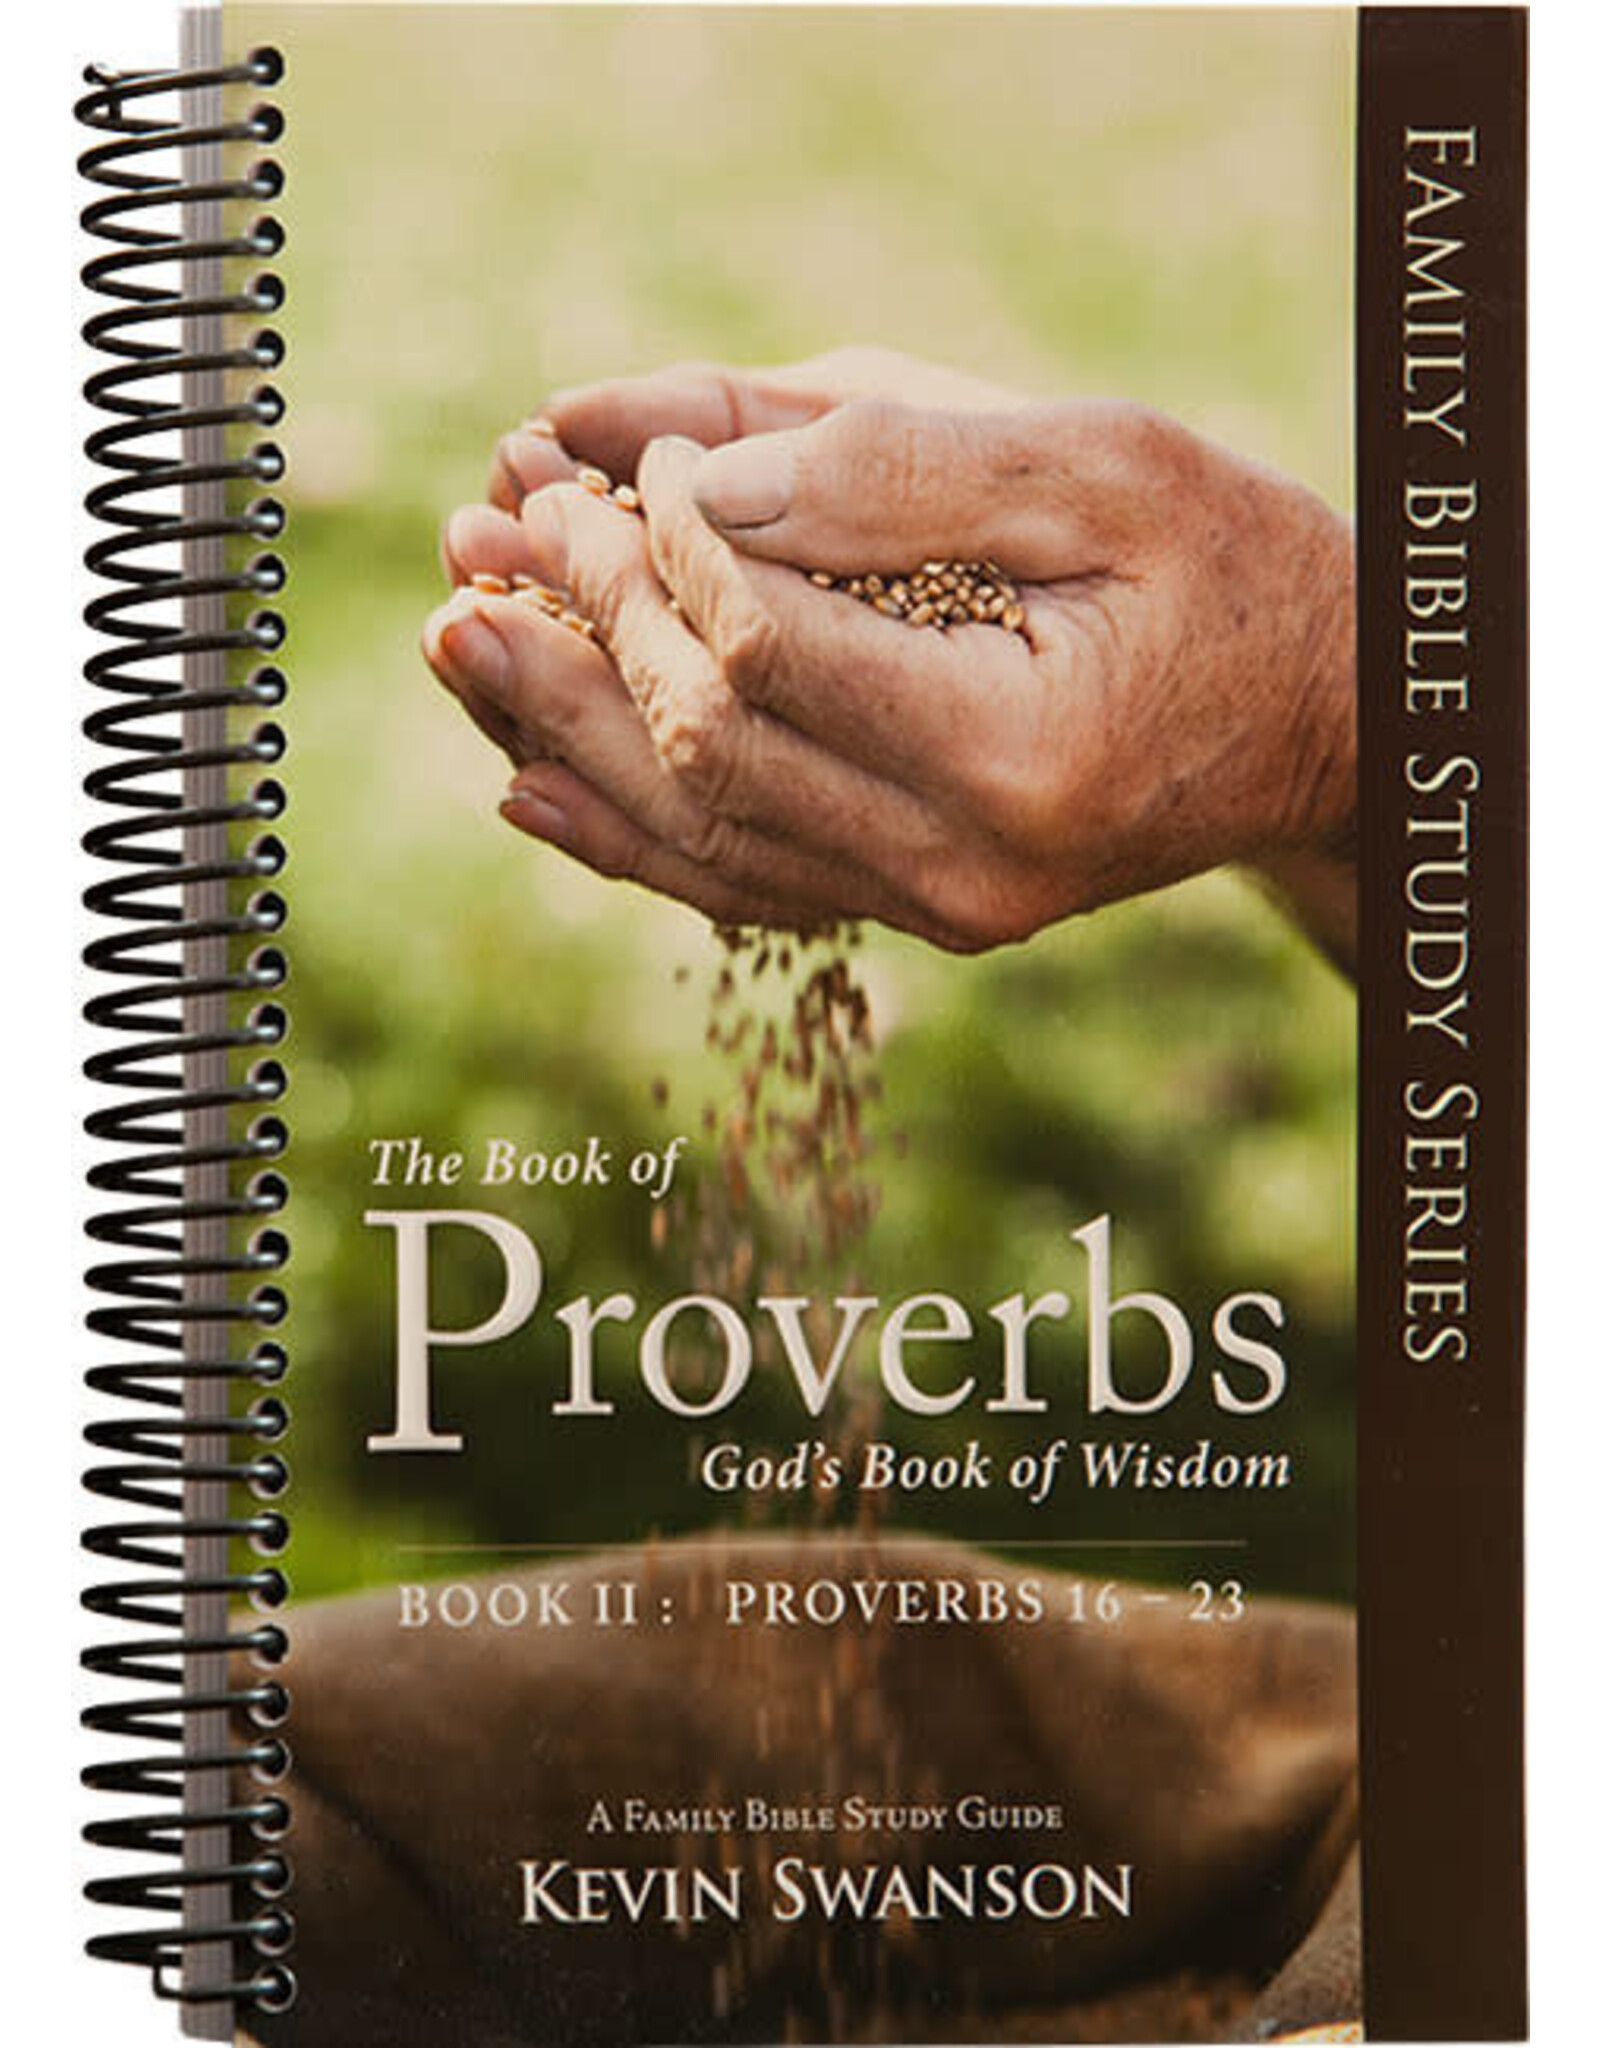 Kevin Swanson Proverbs Study Guide Book Vol. 2 (Prov. 16-23)